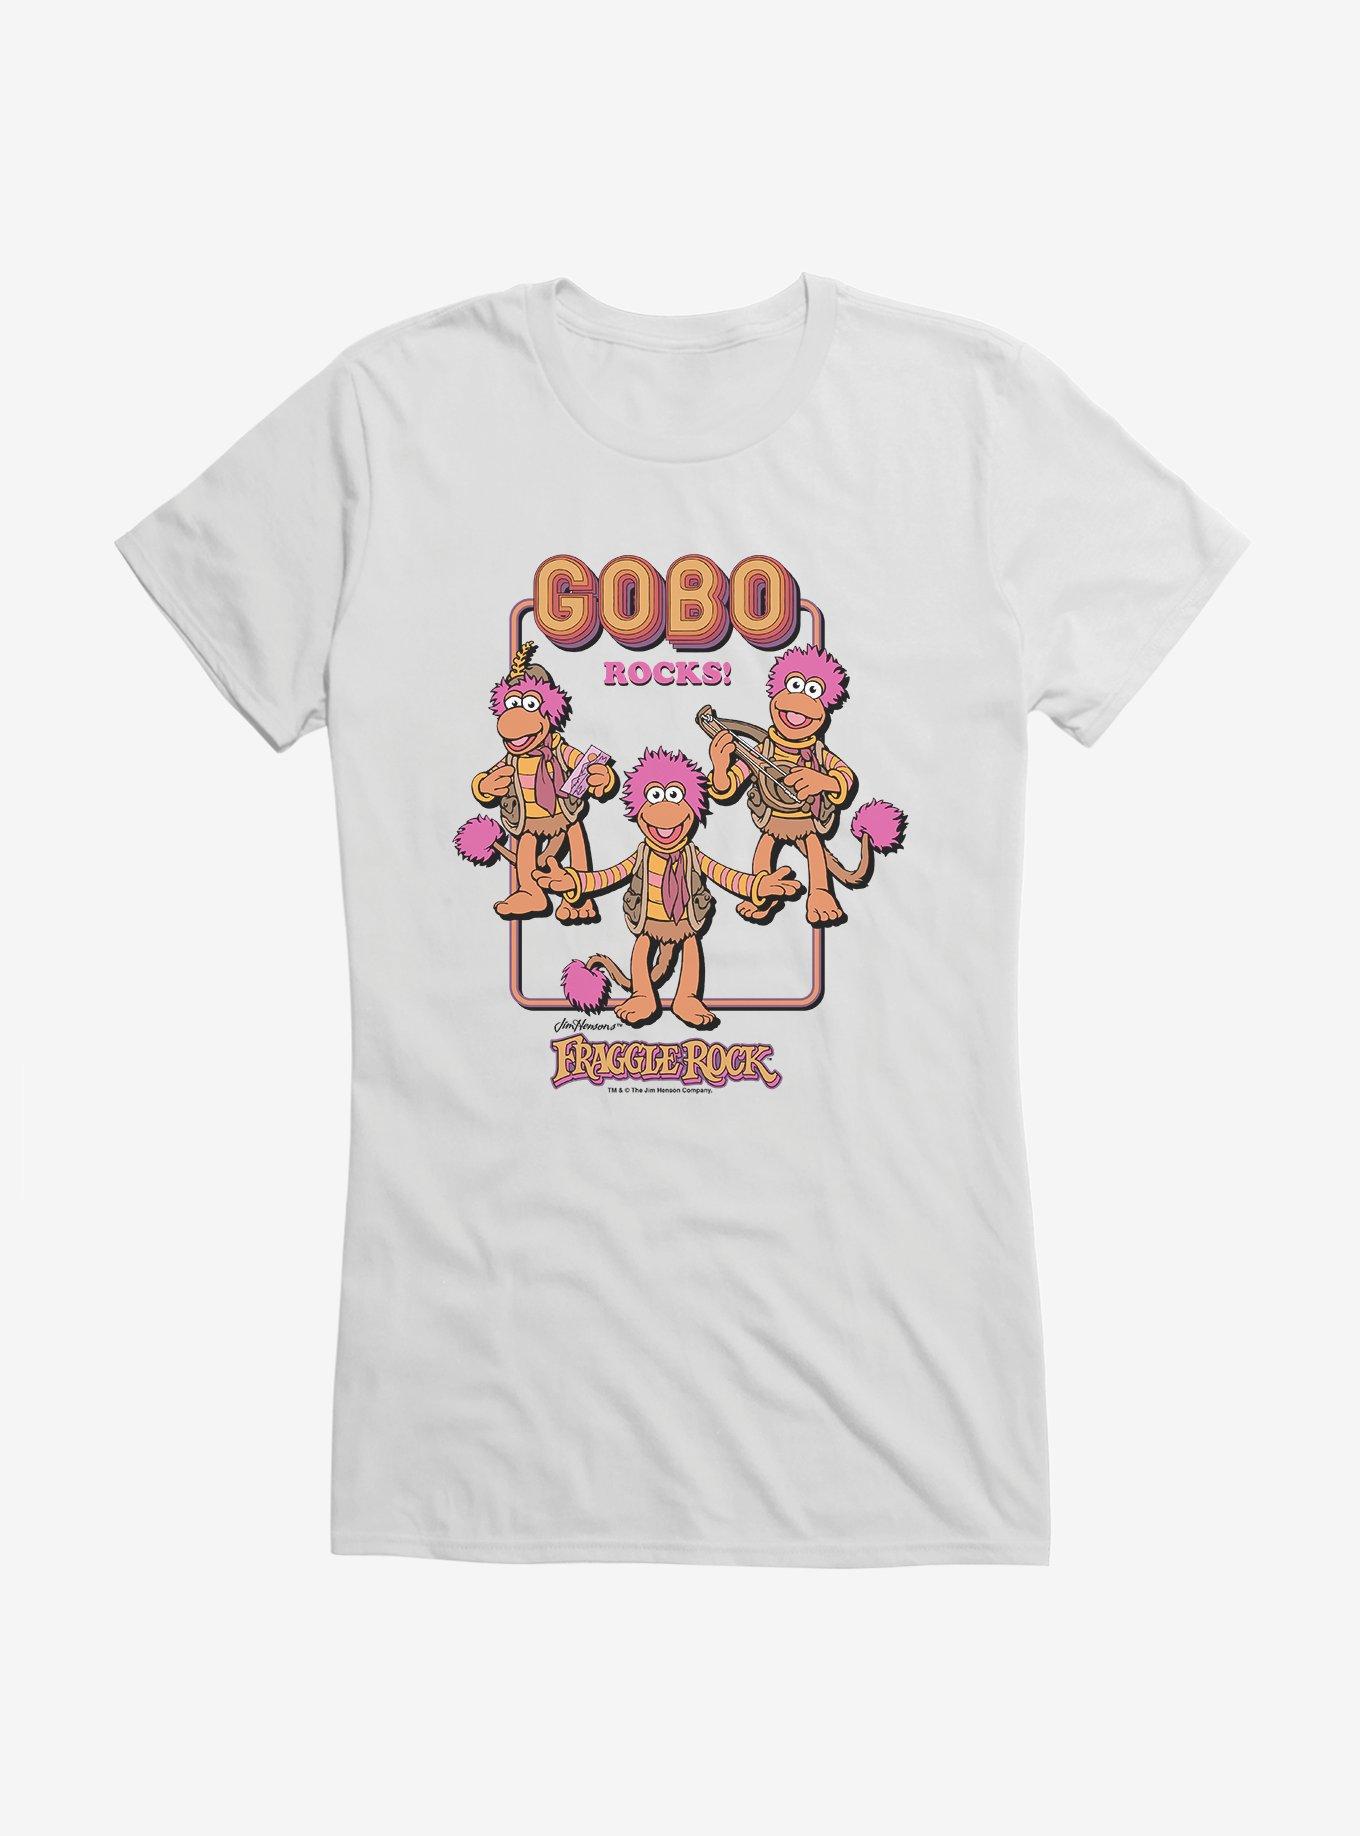 Jim Henson's Fraggle Rock Gobo Rocks Girls T-Shirt